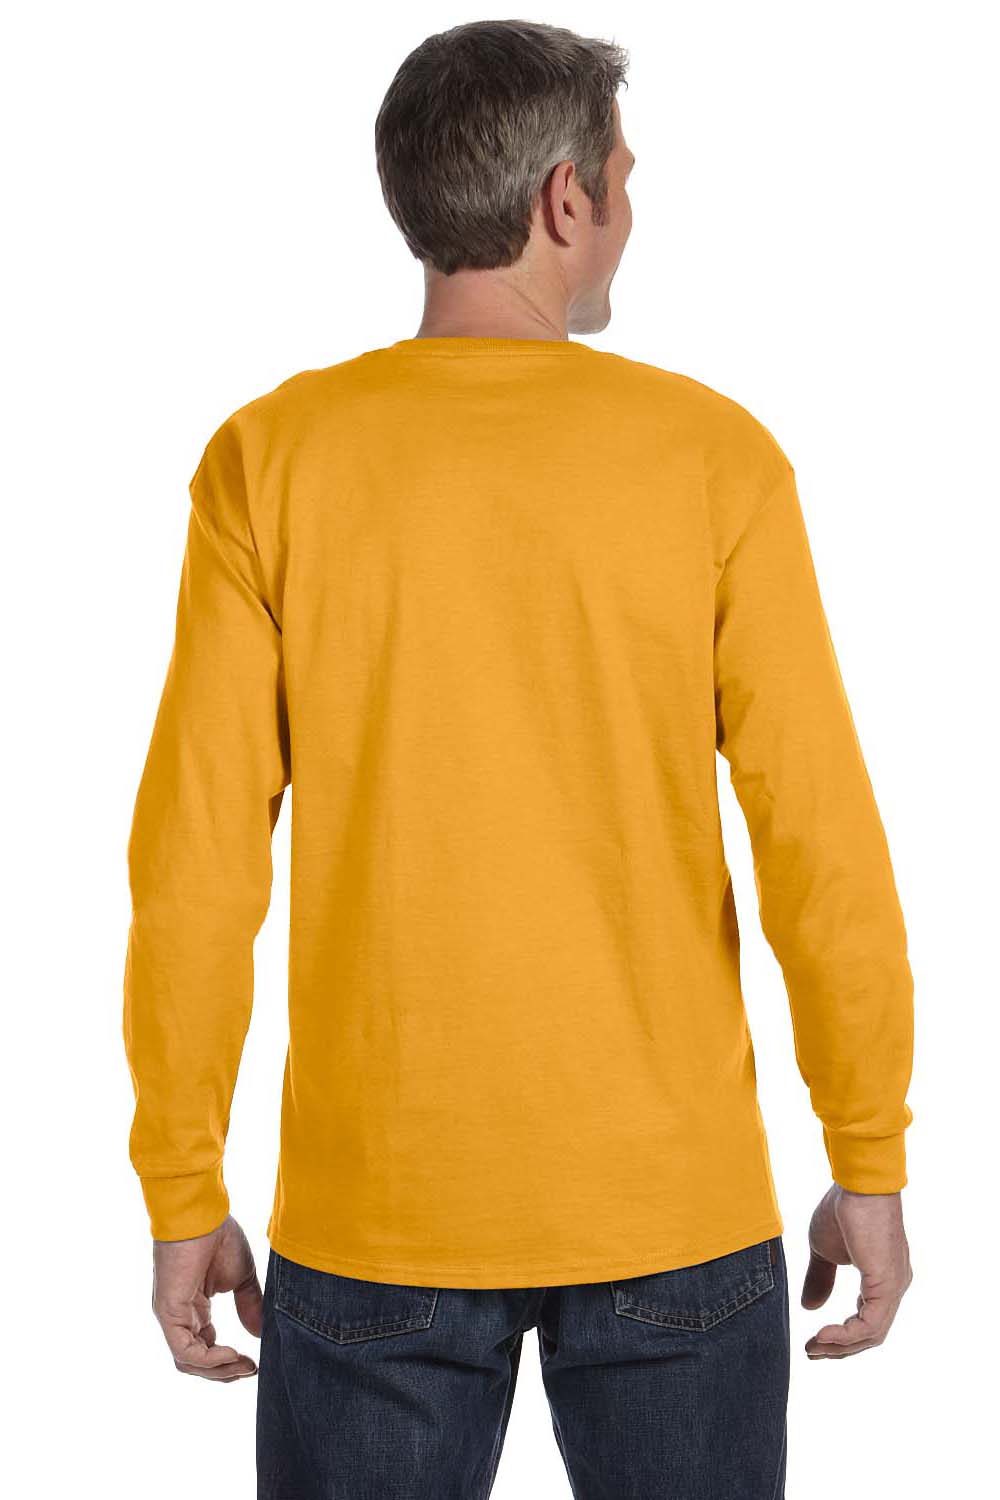 Jerzees 29L Mens Dri-Power Moisture Wicking Long Sleeve Crewneck T-Shirt Gold Back